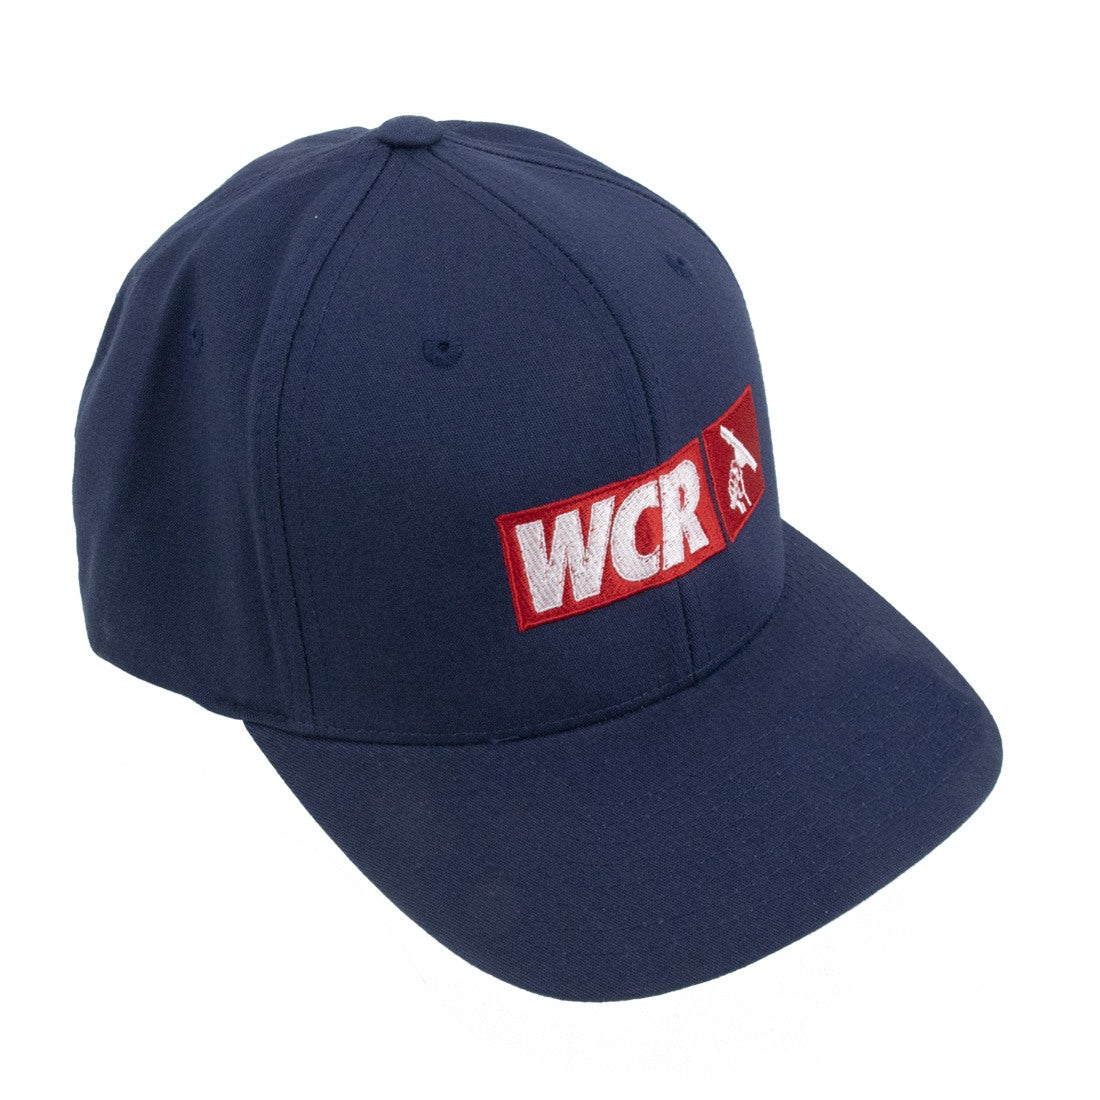 WCR Baseball Hat Full View